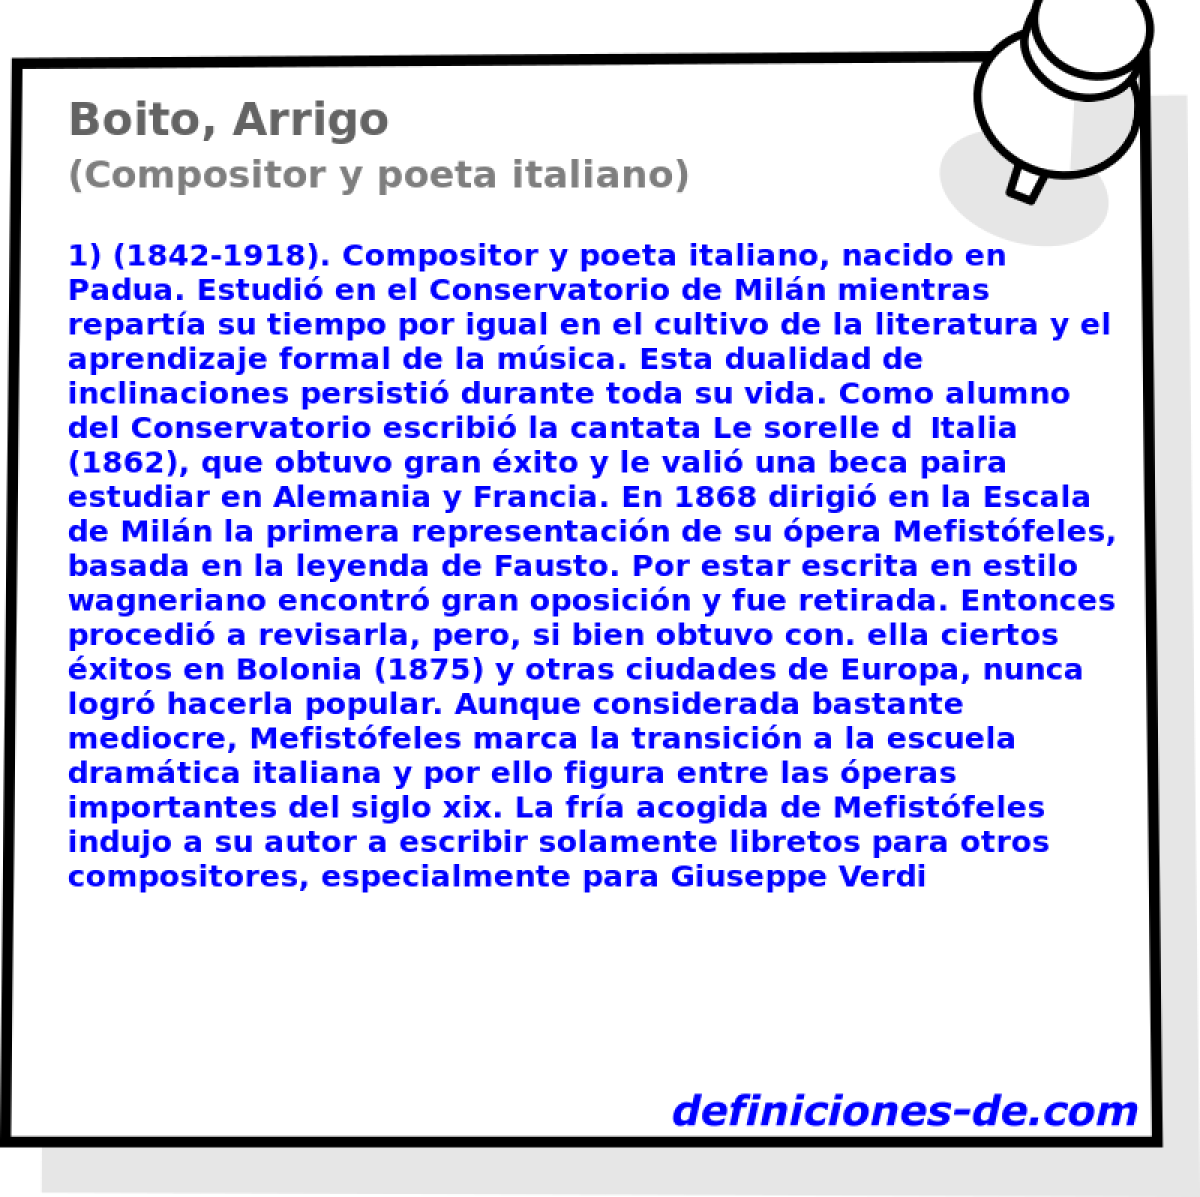 Boito, Arrigo (Compositor y poeta italiano)